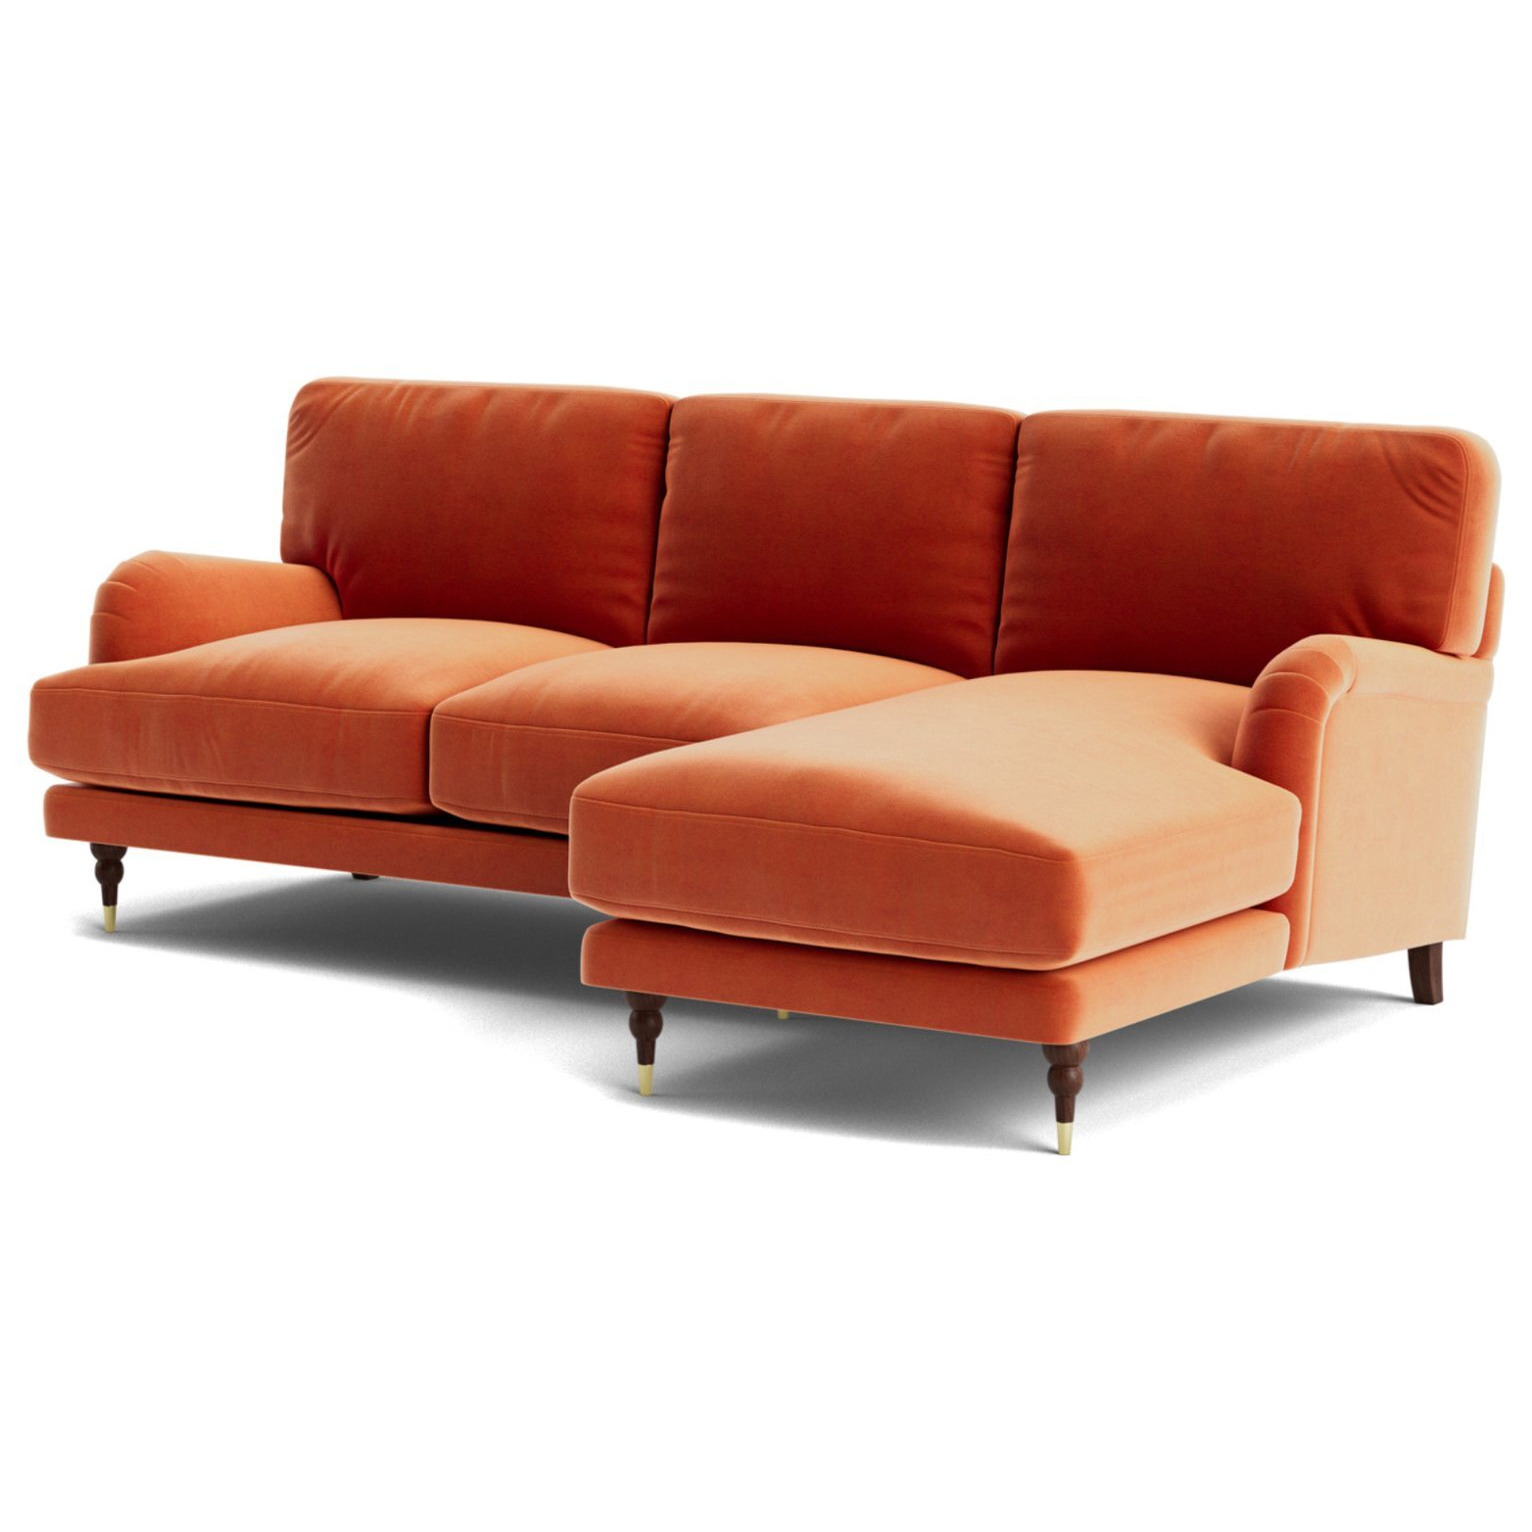 Swoon Charlbury Velvet Right Hand Corner Sofa - Burnt Orange - image 1